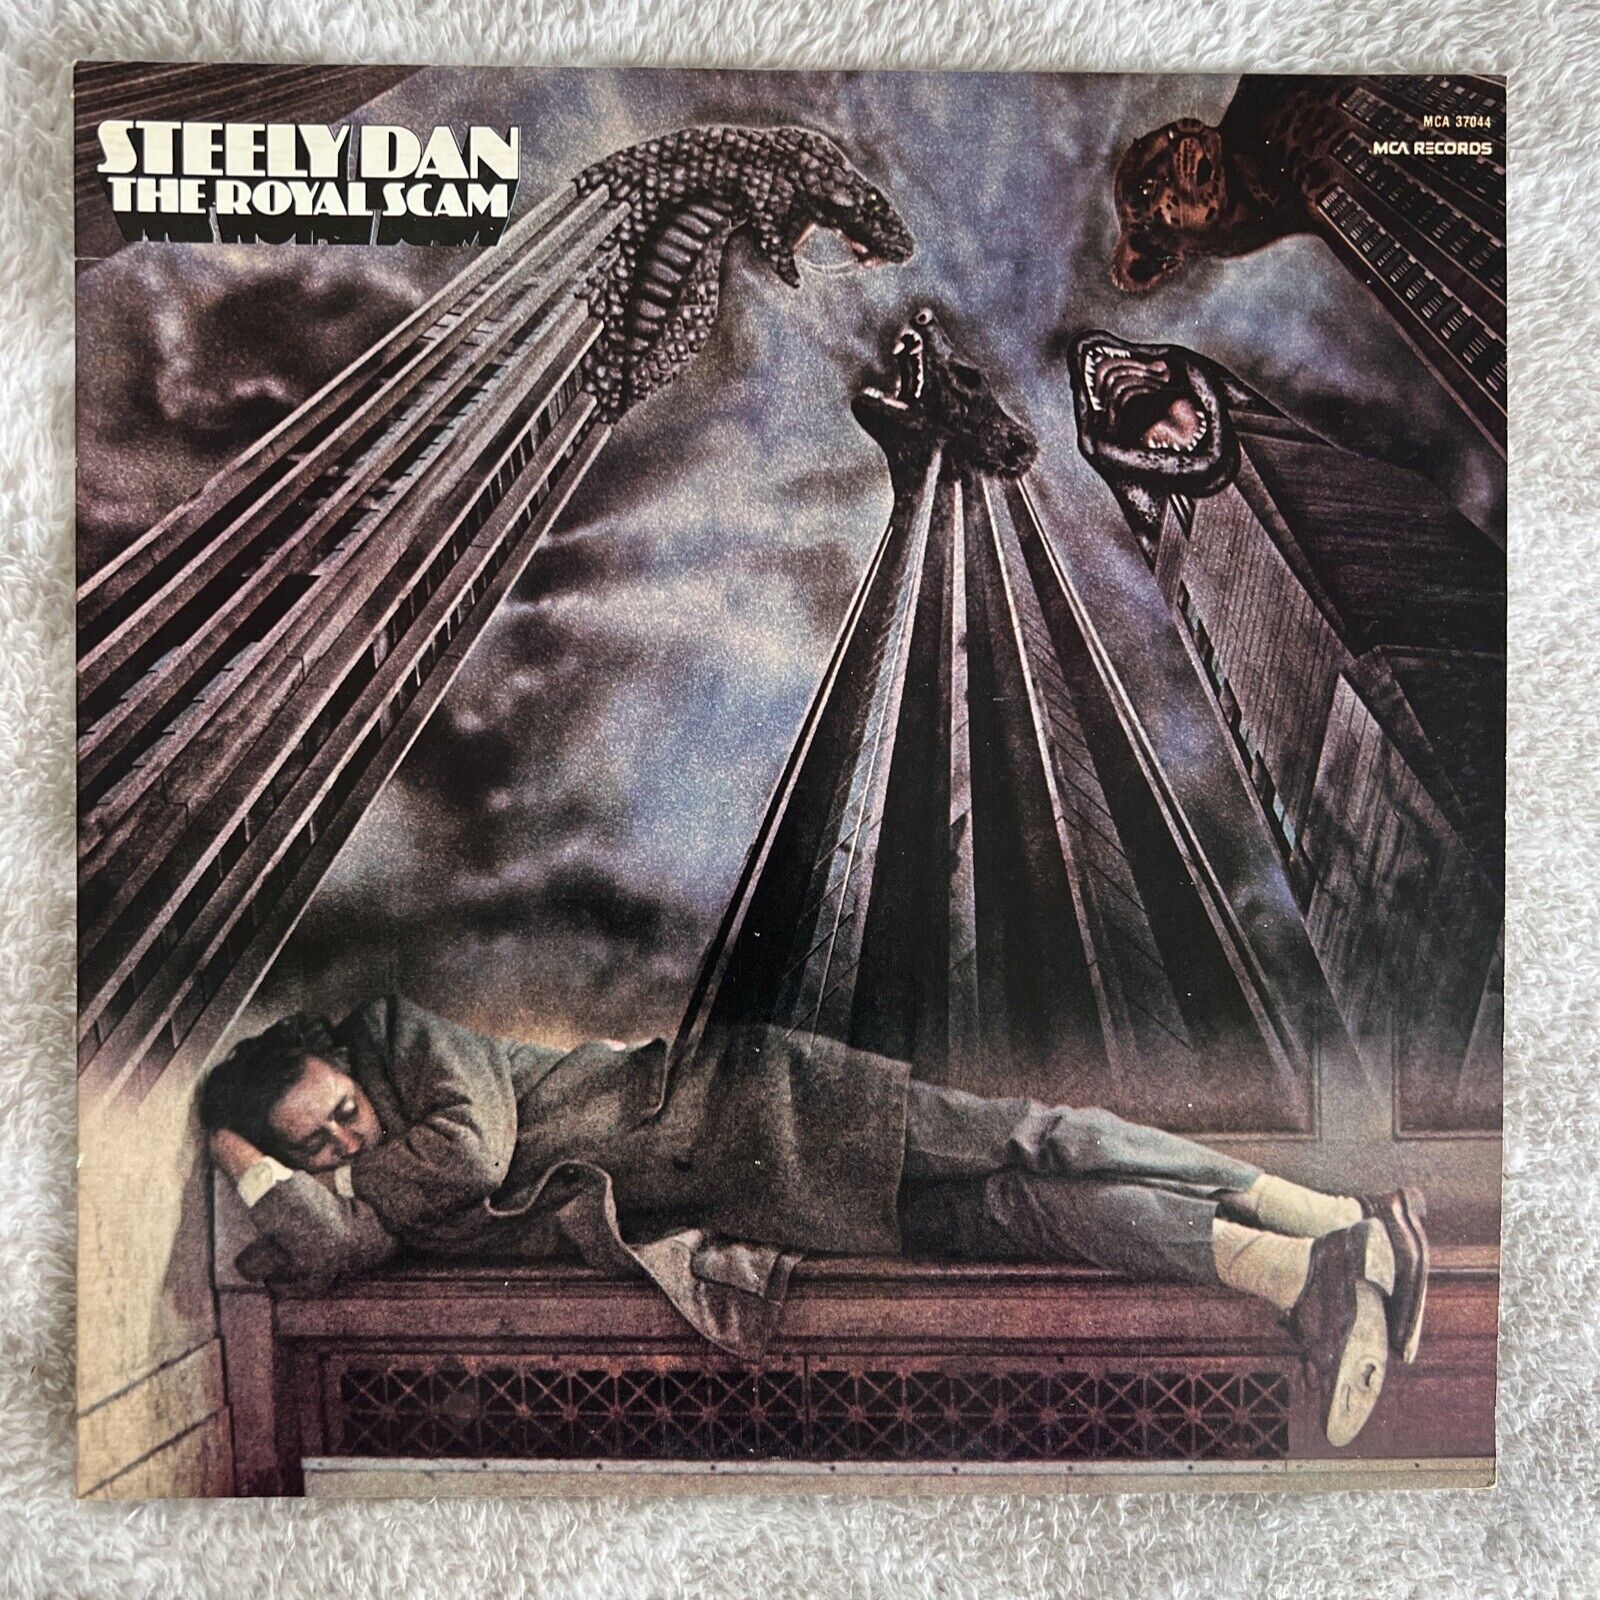 Steely Dan - The Royal Scam LP 1976 MCA Coral MCA-37044  Vinyl EX.